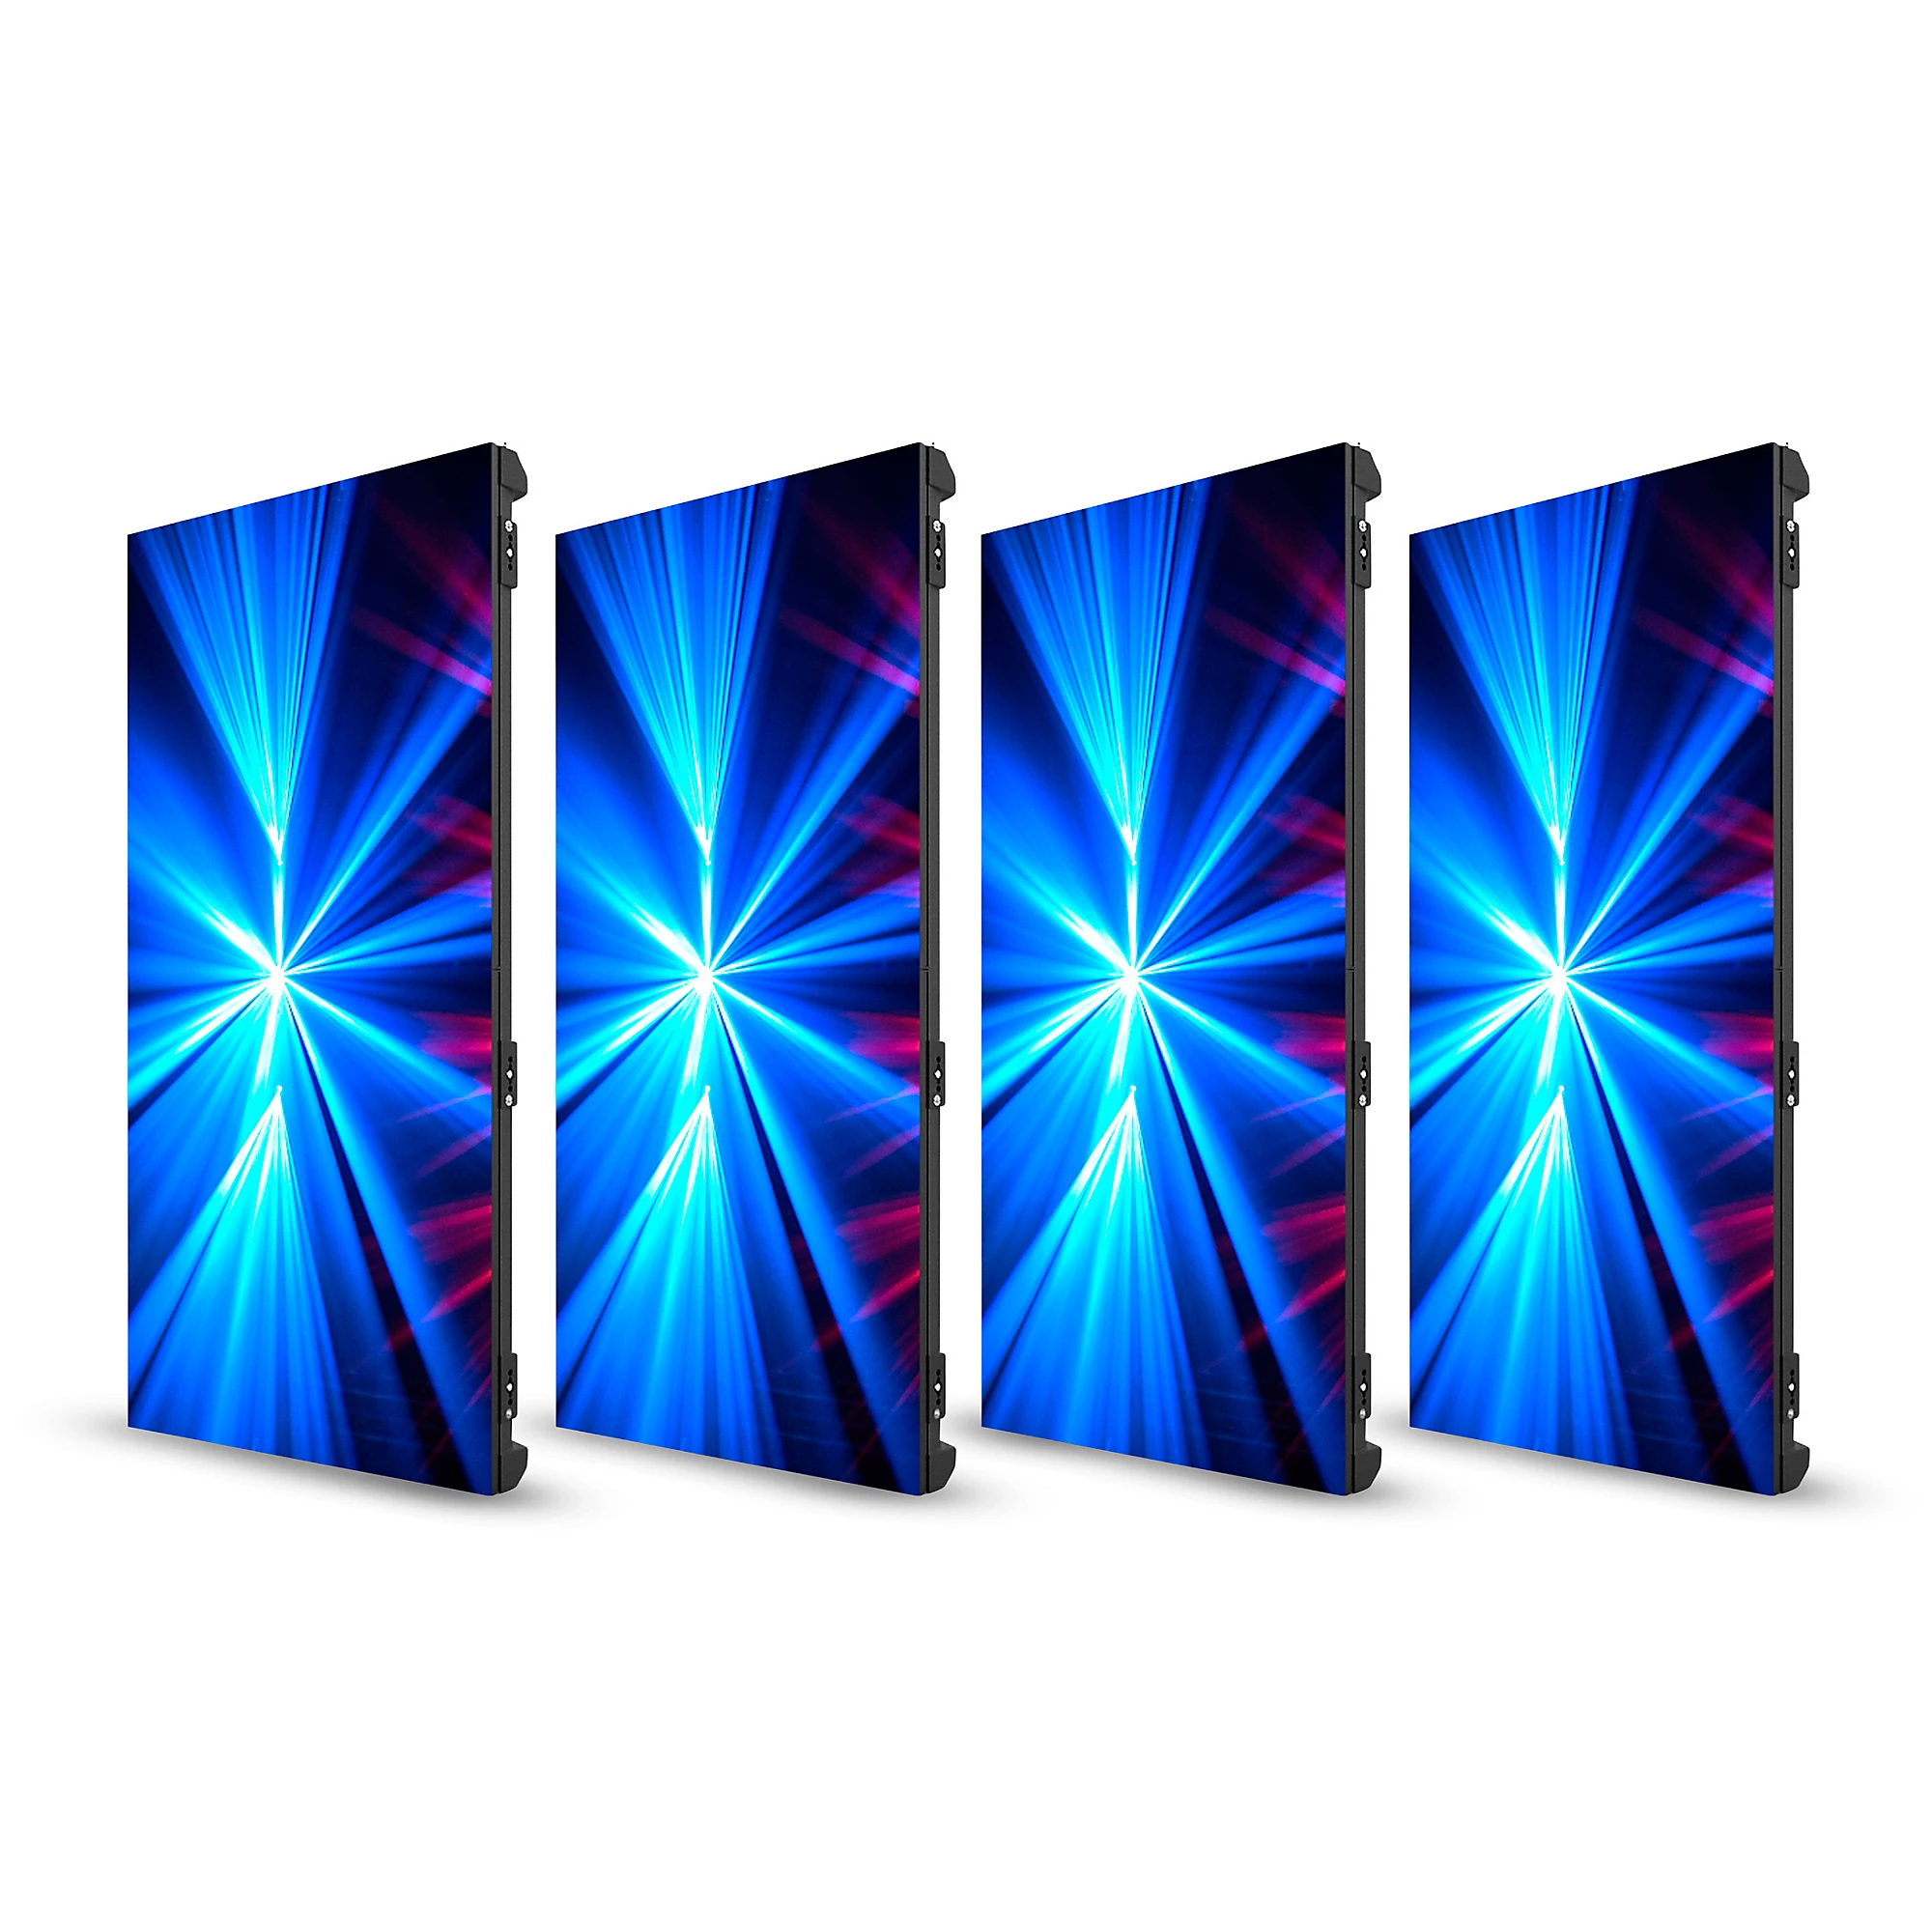 VIVID 4 LED Video Panel Display – 4 Pack